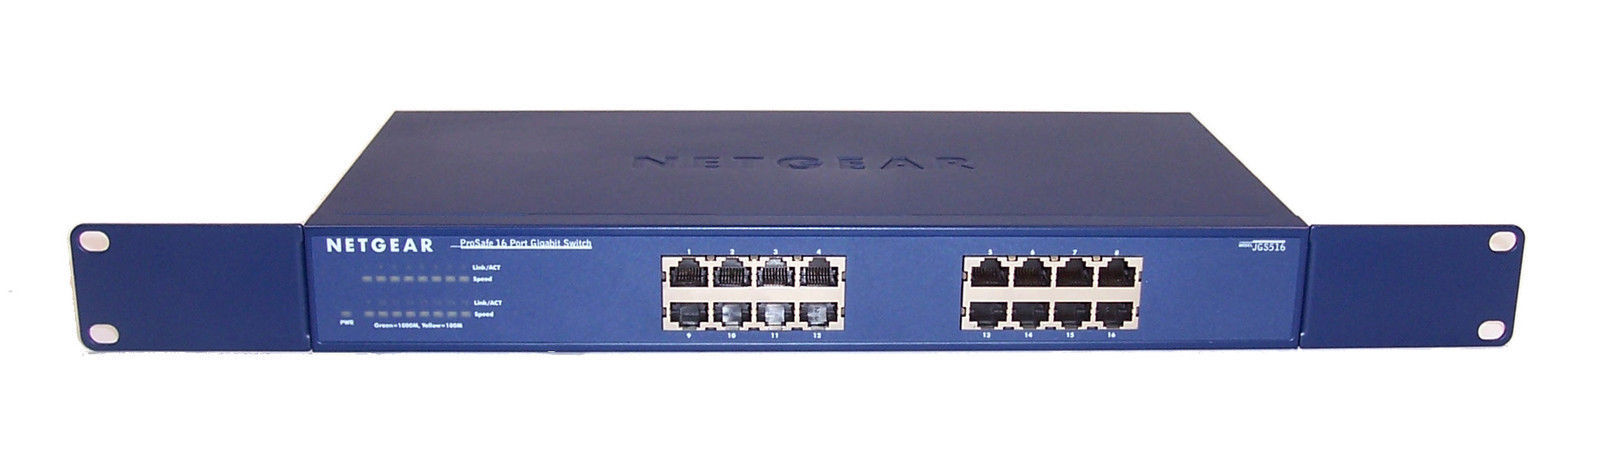 Netgear ProSafe 16-Port 10/100 Rackmount Switch